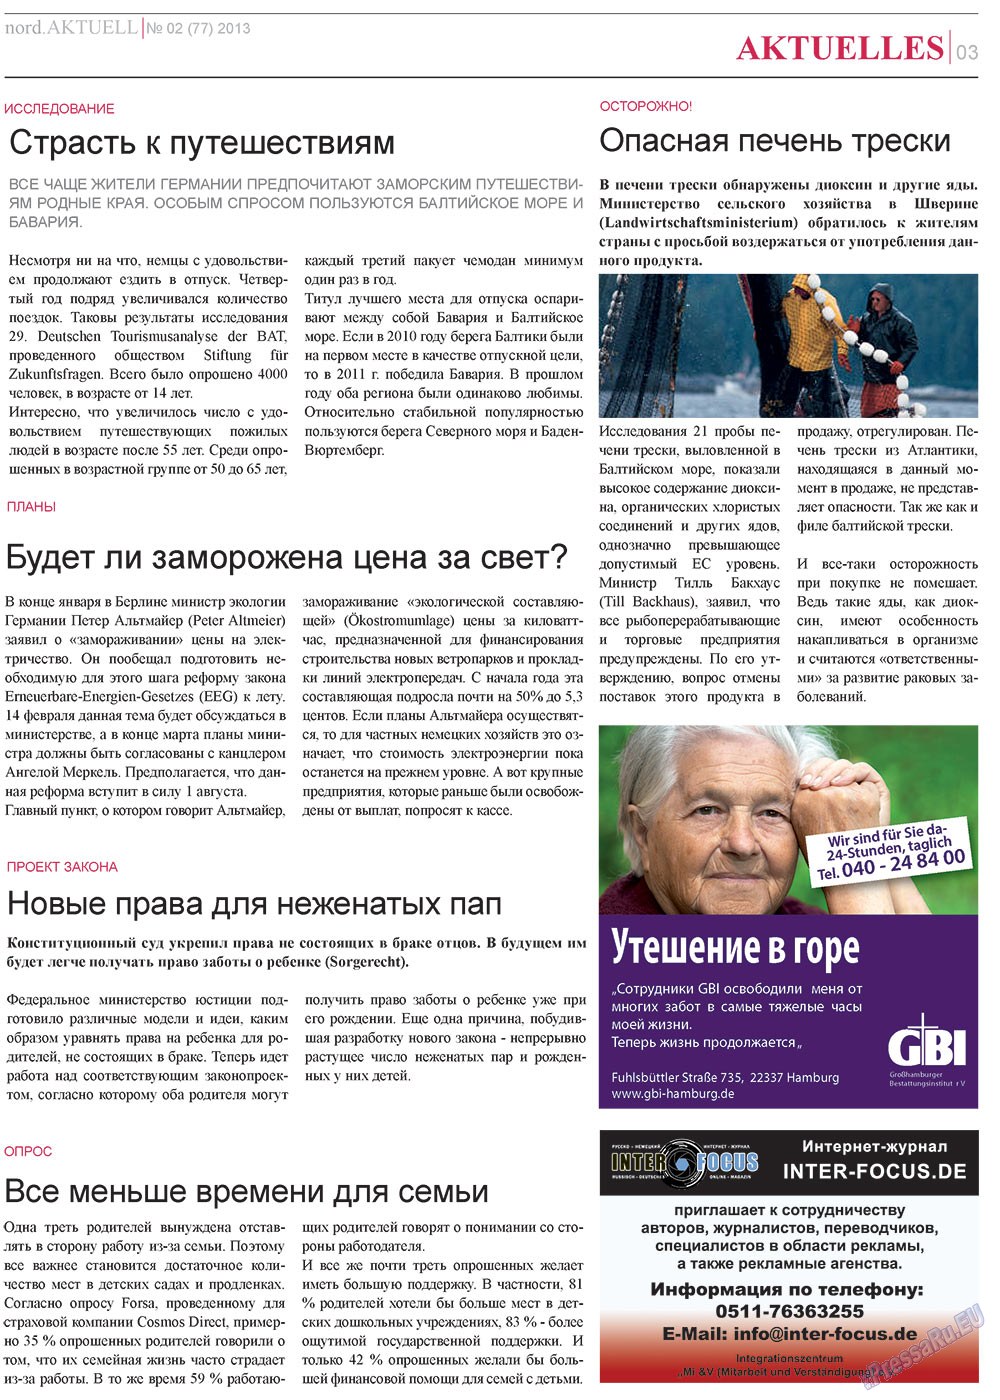 nord.Aktuell, газета. 2013 №2 стр.3